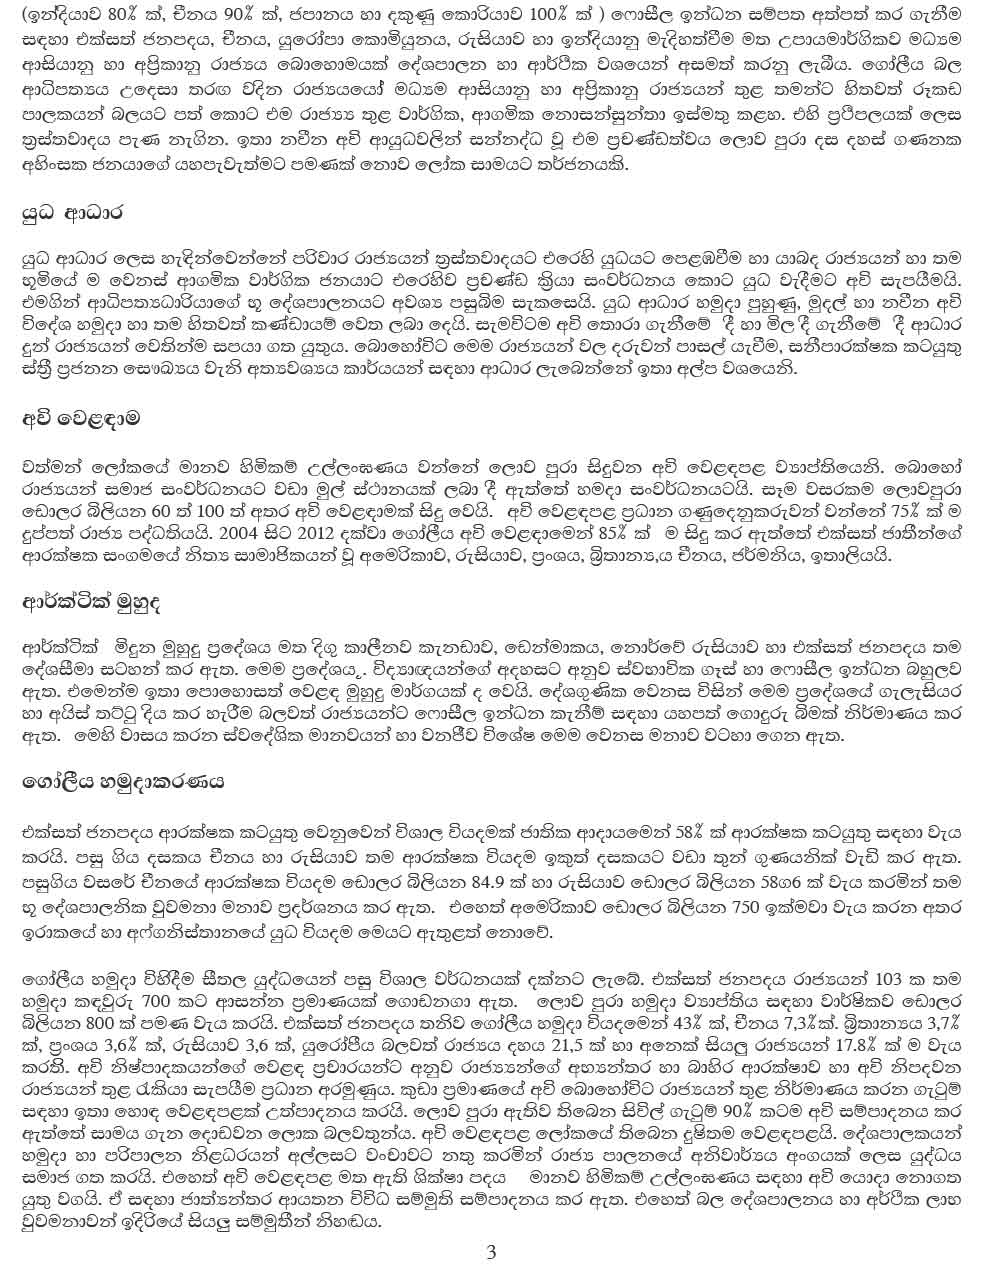 SLAS Pass Paper 09 by Anusha Gokula - General Knowledge in Sinhala 